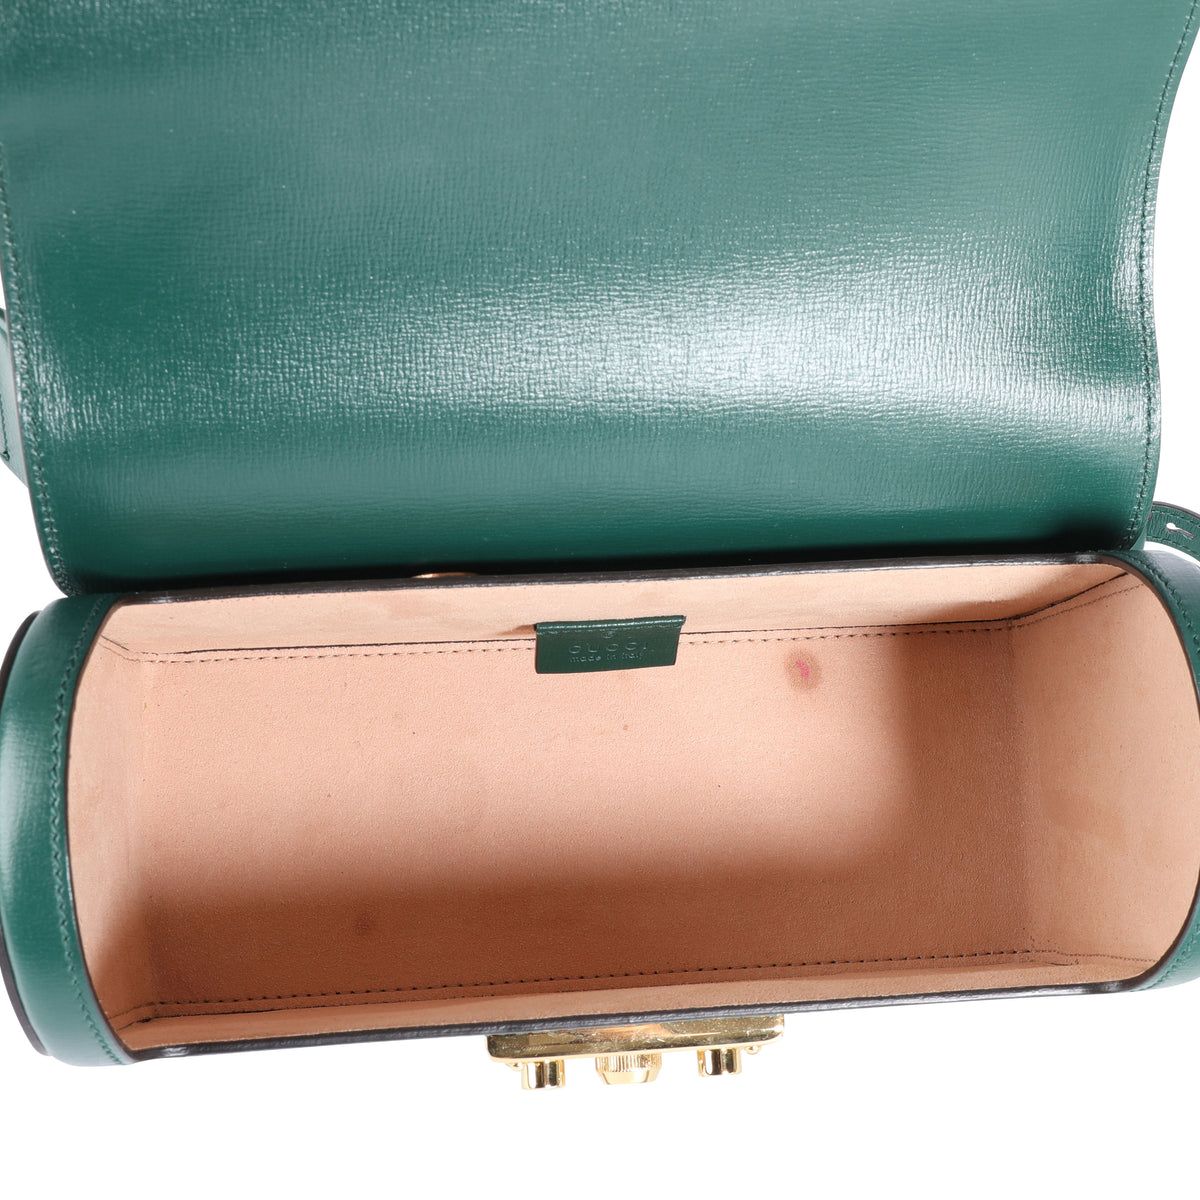 Gucci Green Leather Padlock Bamboo Small Shoulder Bag